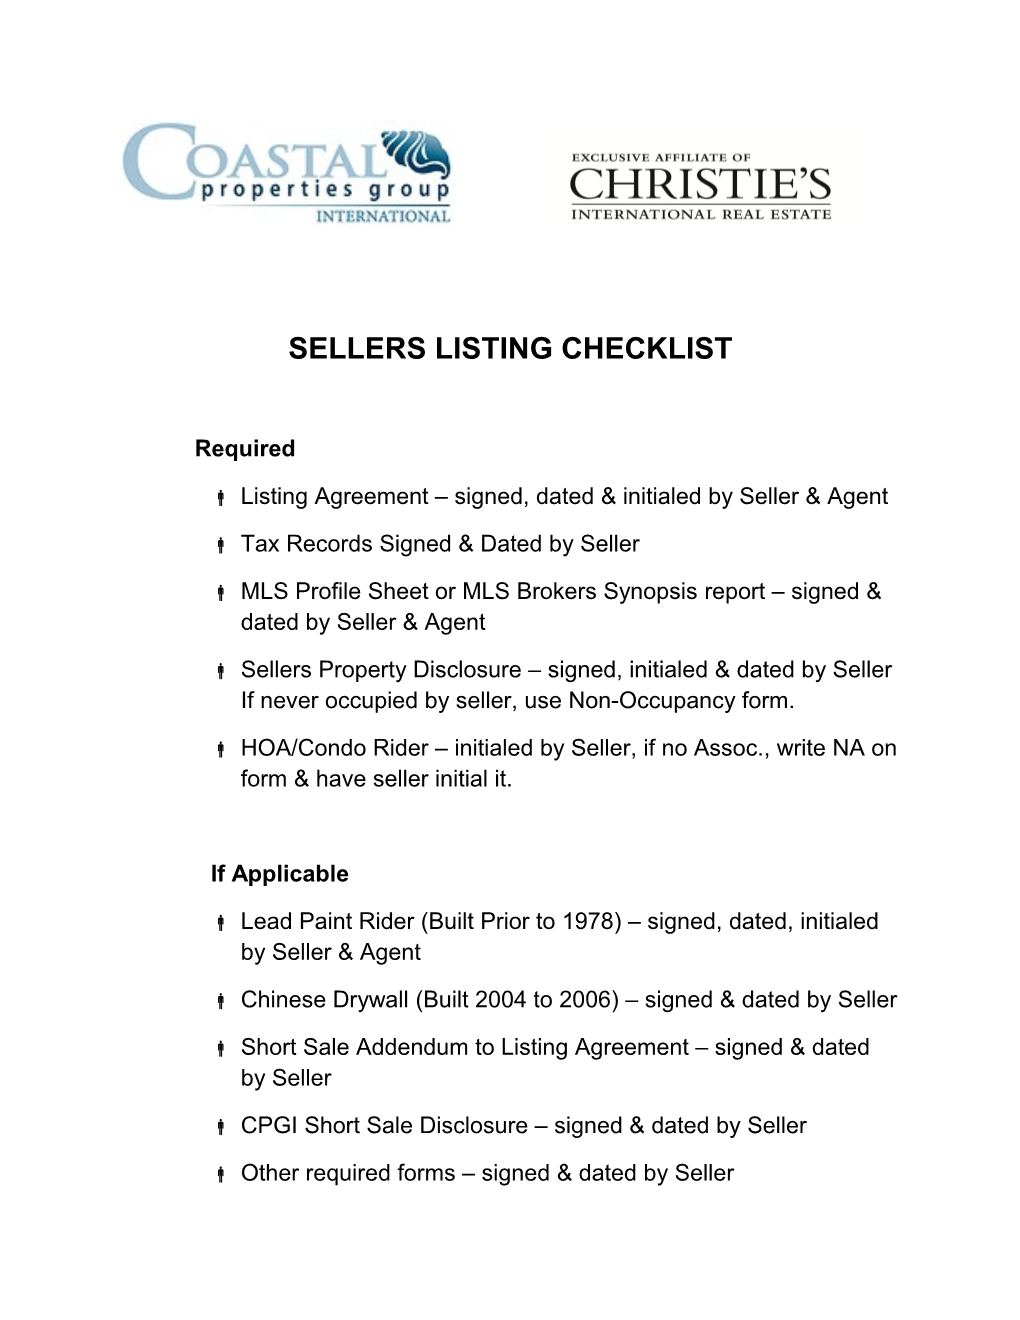 Sellers Listing Checklist